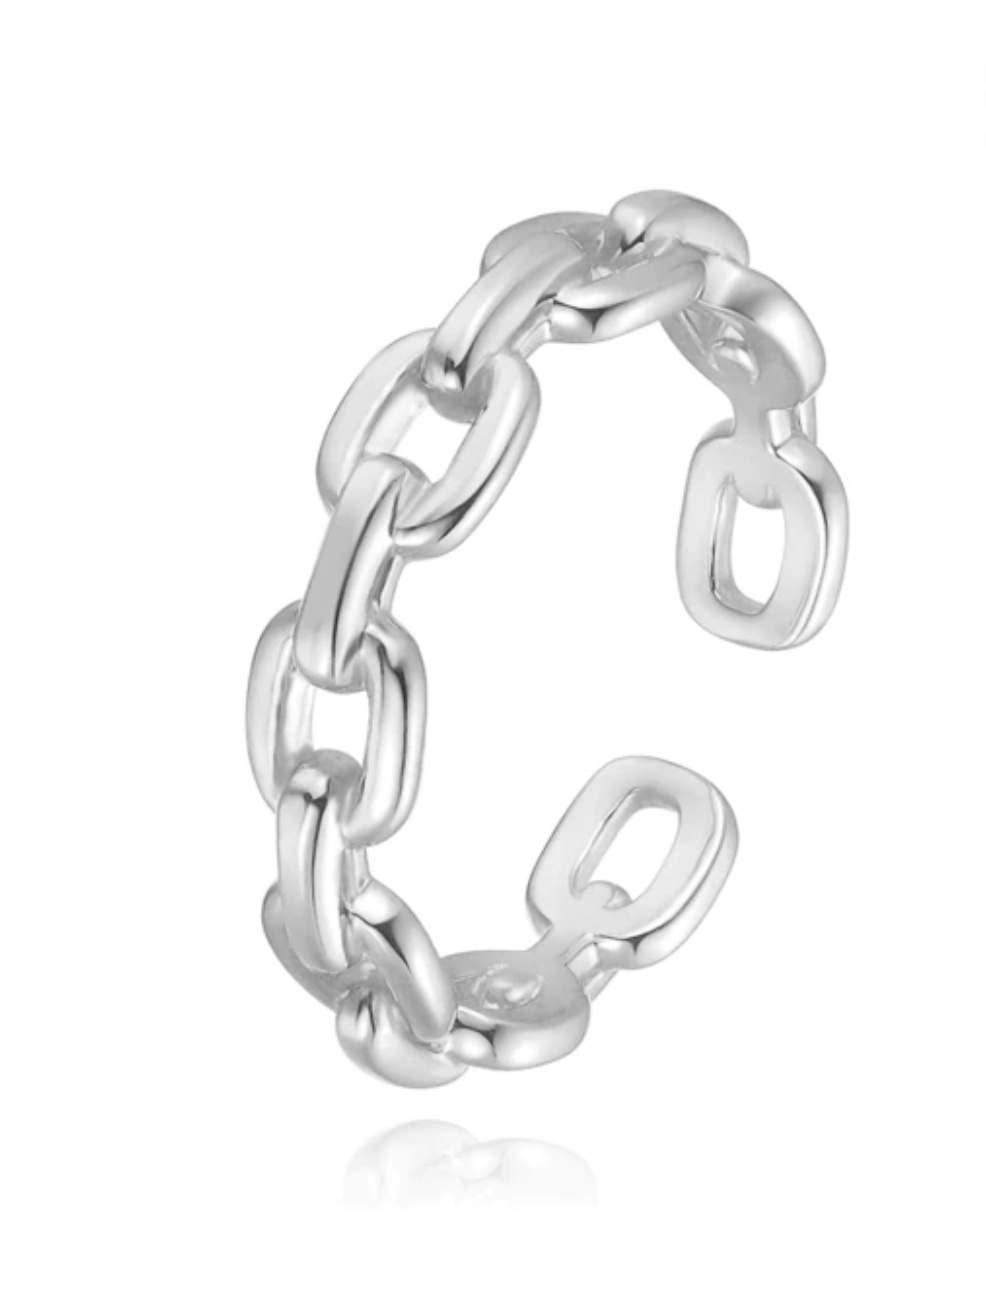 Adjustable Ring Retro Chain Style